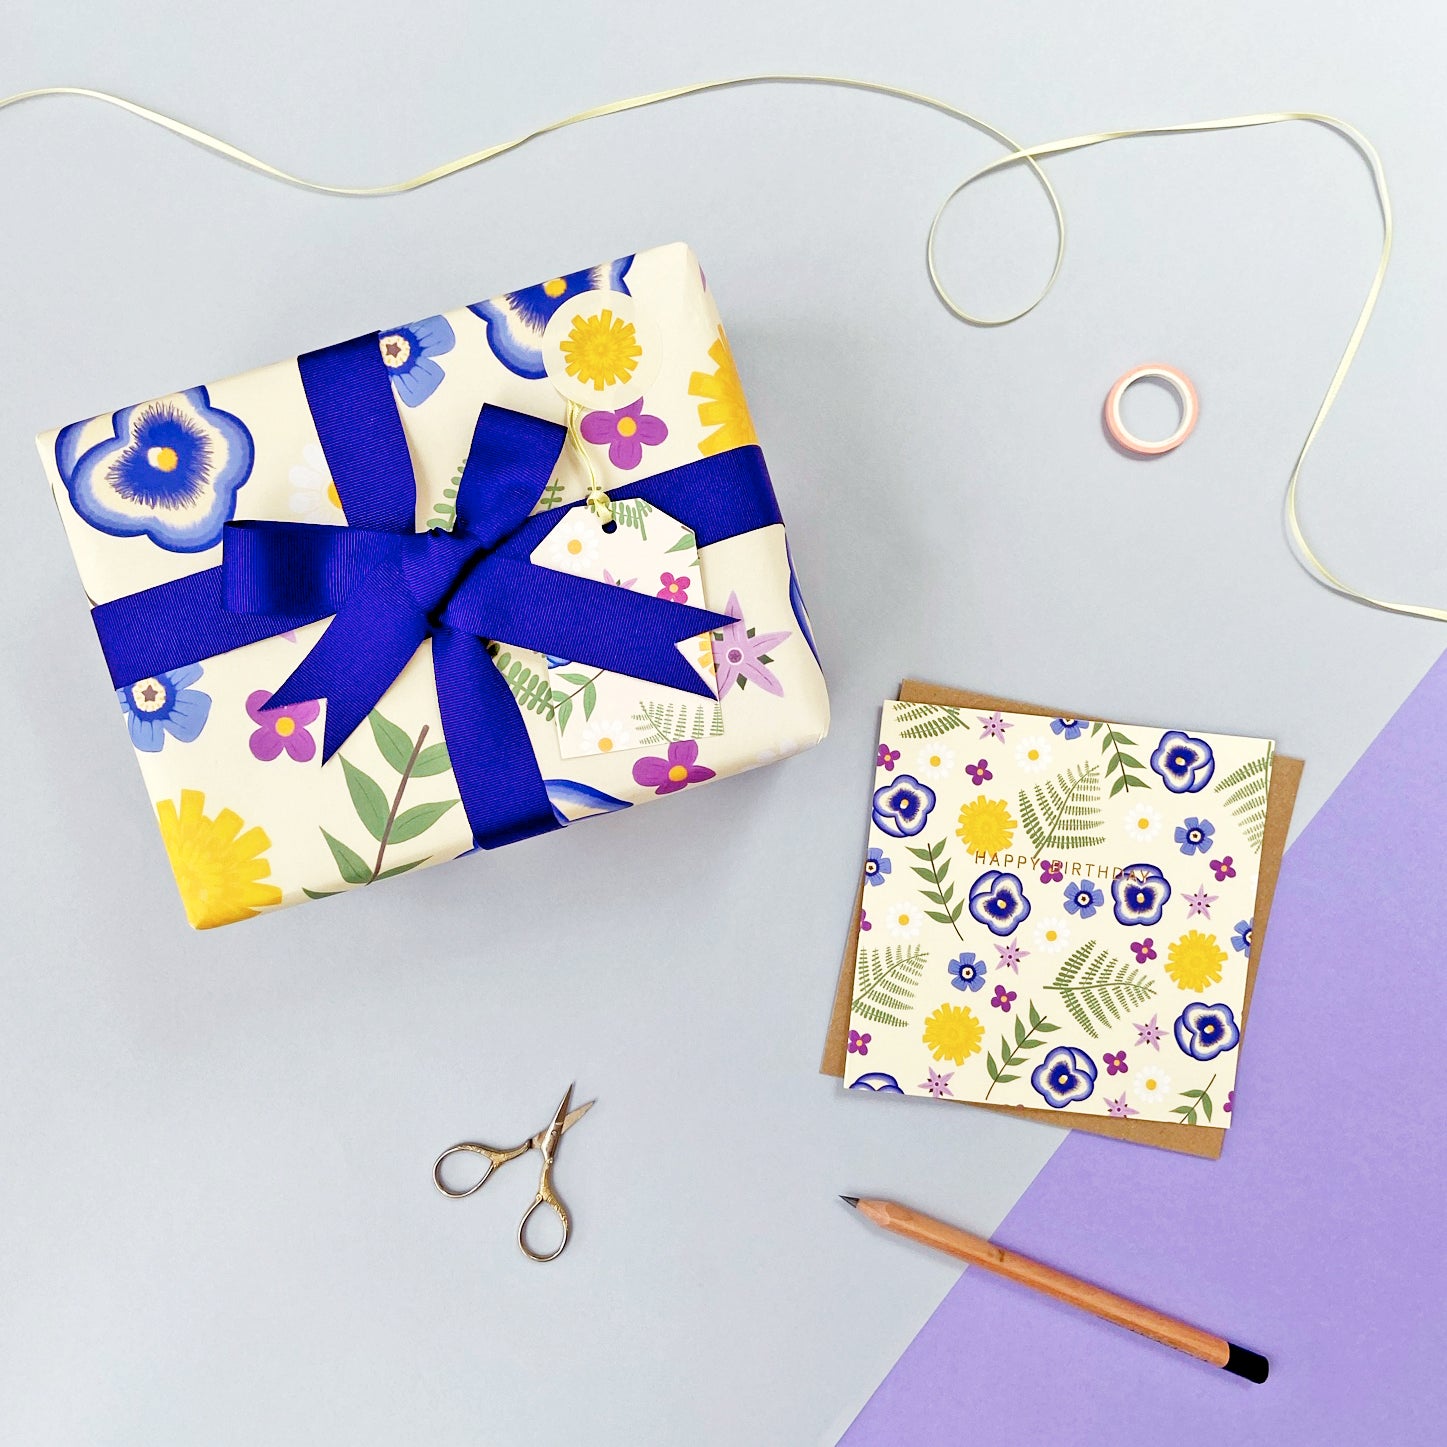 botanical birthday card with matching gift wrap and indigo ribbon bow